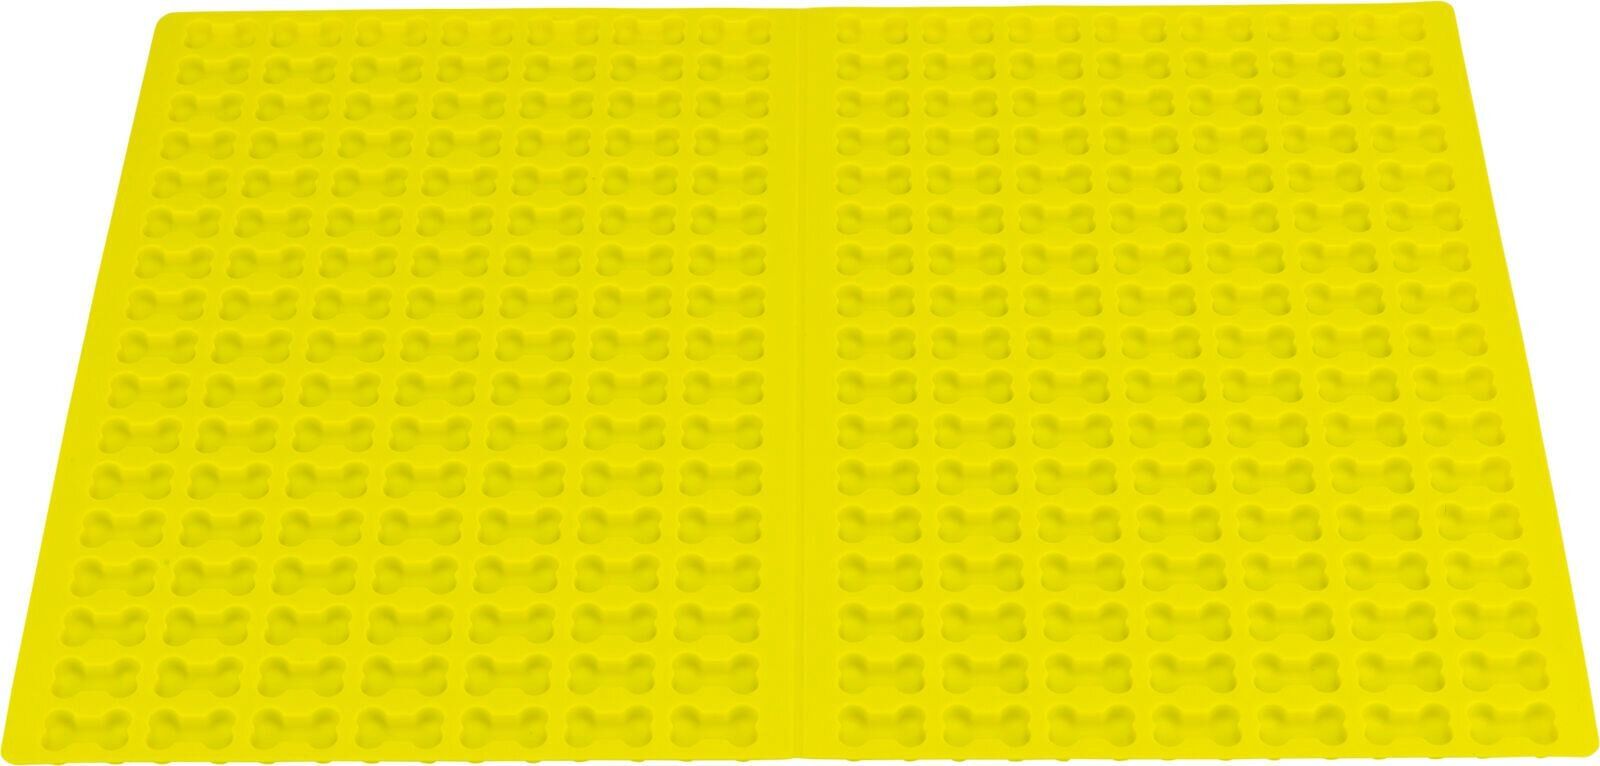 Podložka na pečení KOSTIČKY, 38 x 28 cm, silikon, neonově žlutá TRIXIE